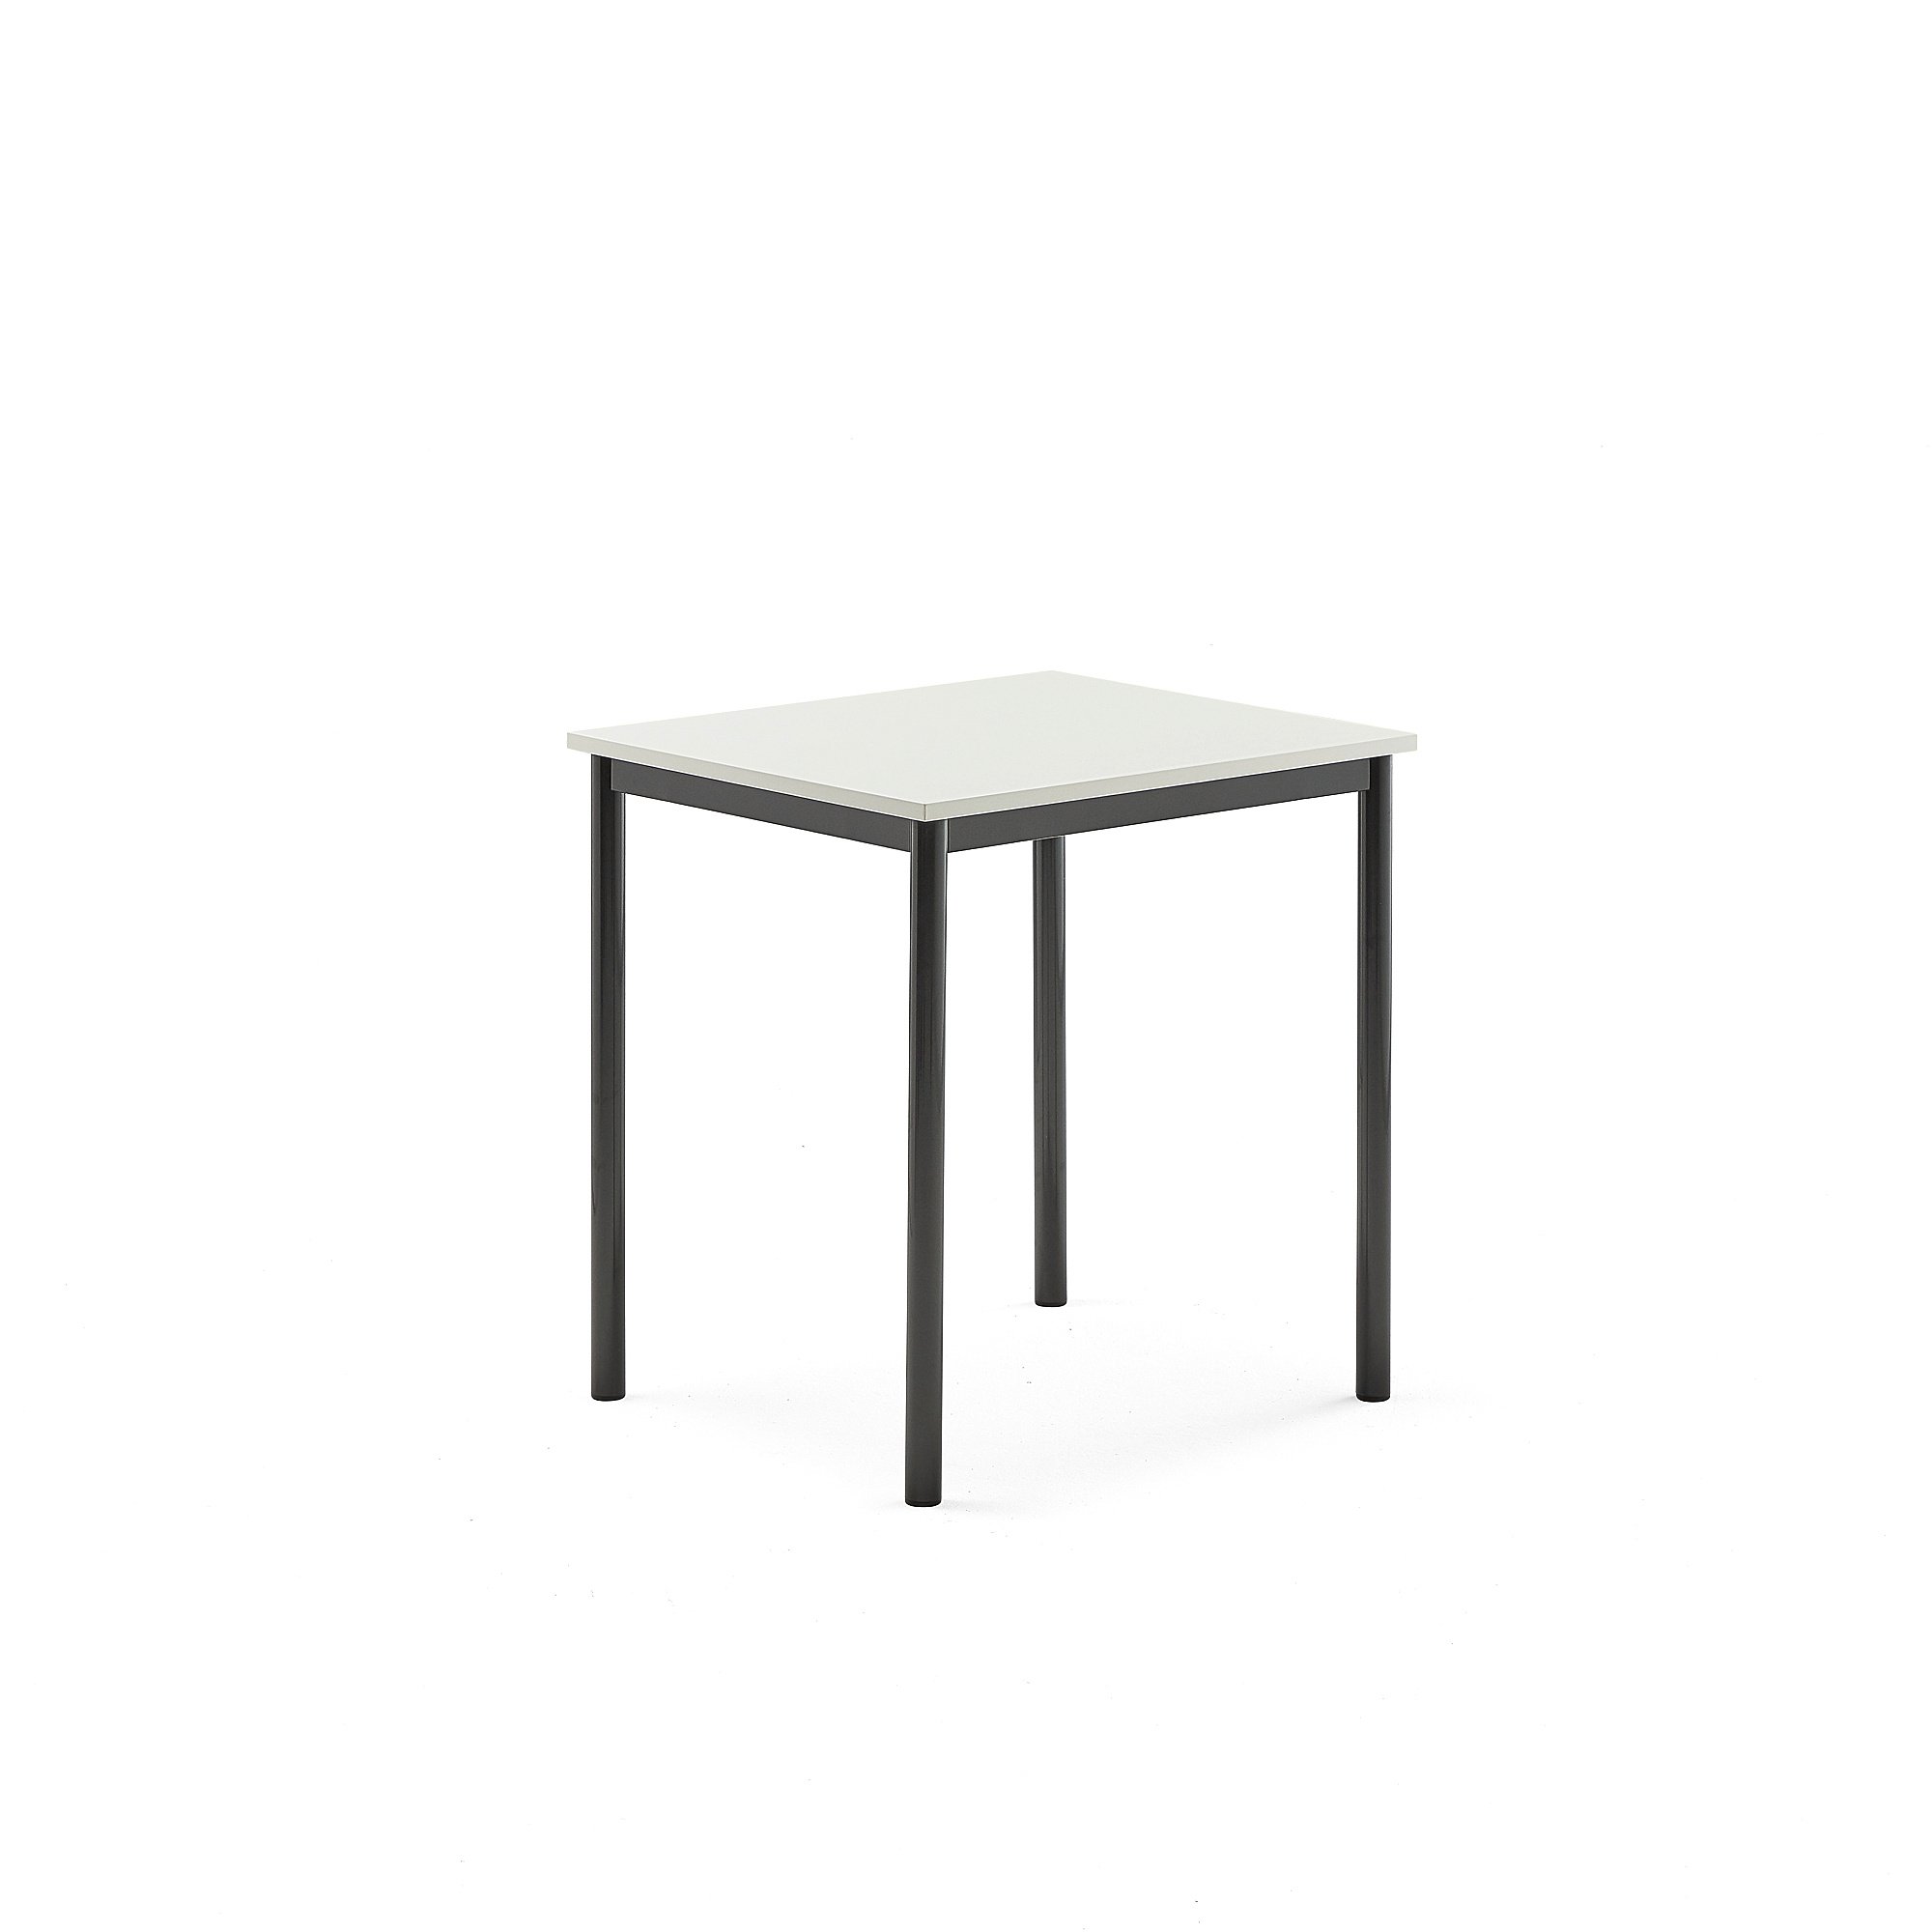 Stůl BORÅS, 700x600x720 mm, antracitově šedé nohy, HPL deska, bílá